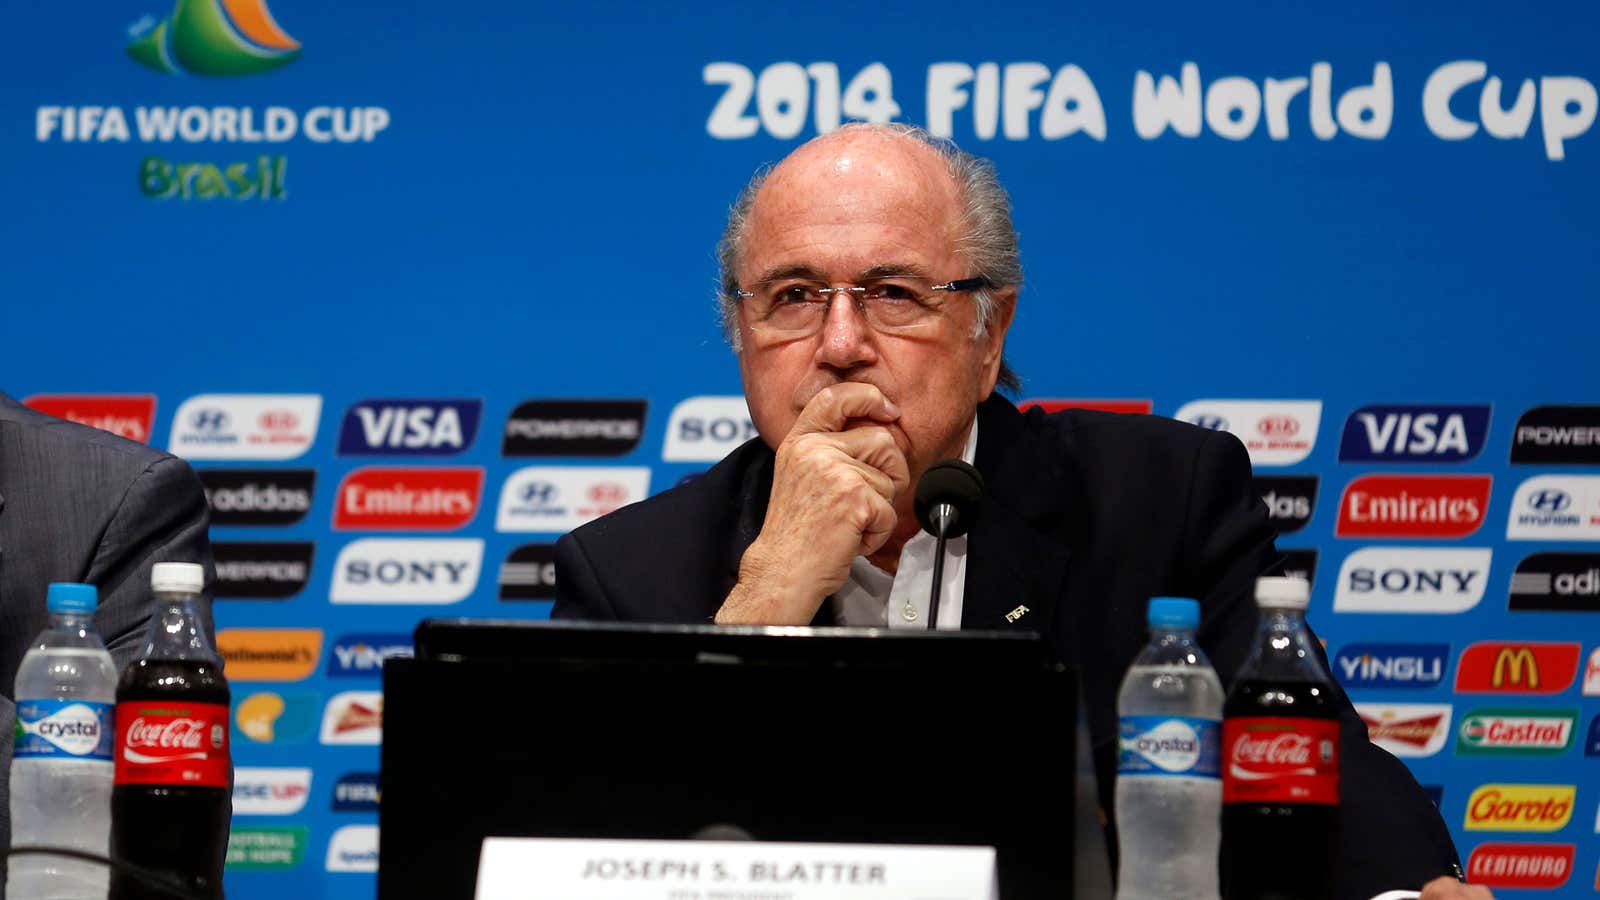 Will big brands keep lining up behind Sepp Blatter?